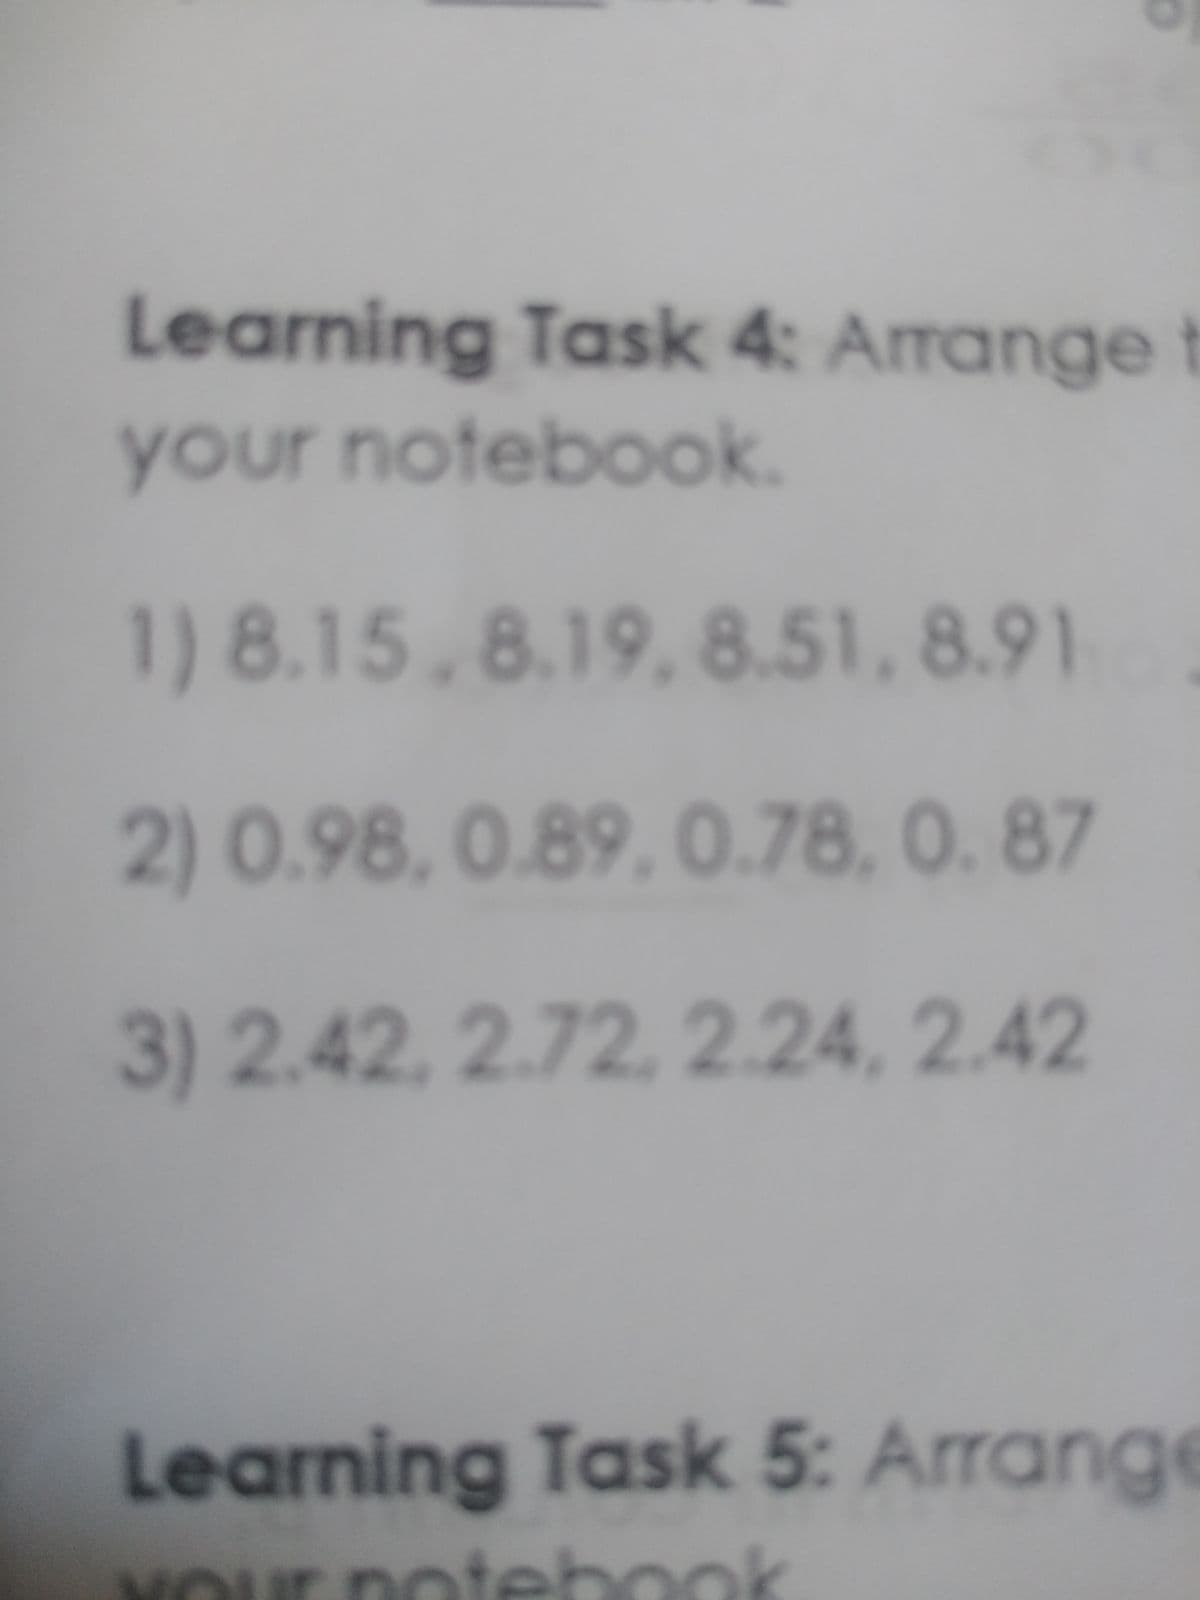 Learning Task 4: Arrangef
your notebook.
1) 8.15,8.19, 8.51, 8.91
2) 0.98, 0.89, 0.78, 0. 87
3)2.42,2.72. 2.24, 2.42
Learning Task 5: Arrange
noteho
MOur Dotebook
